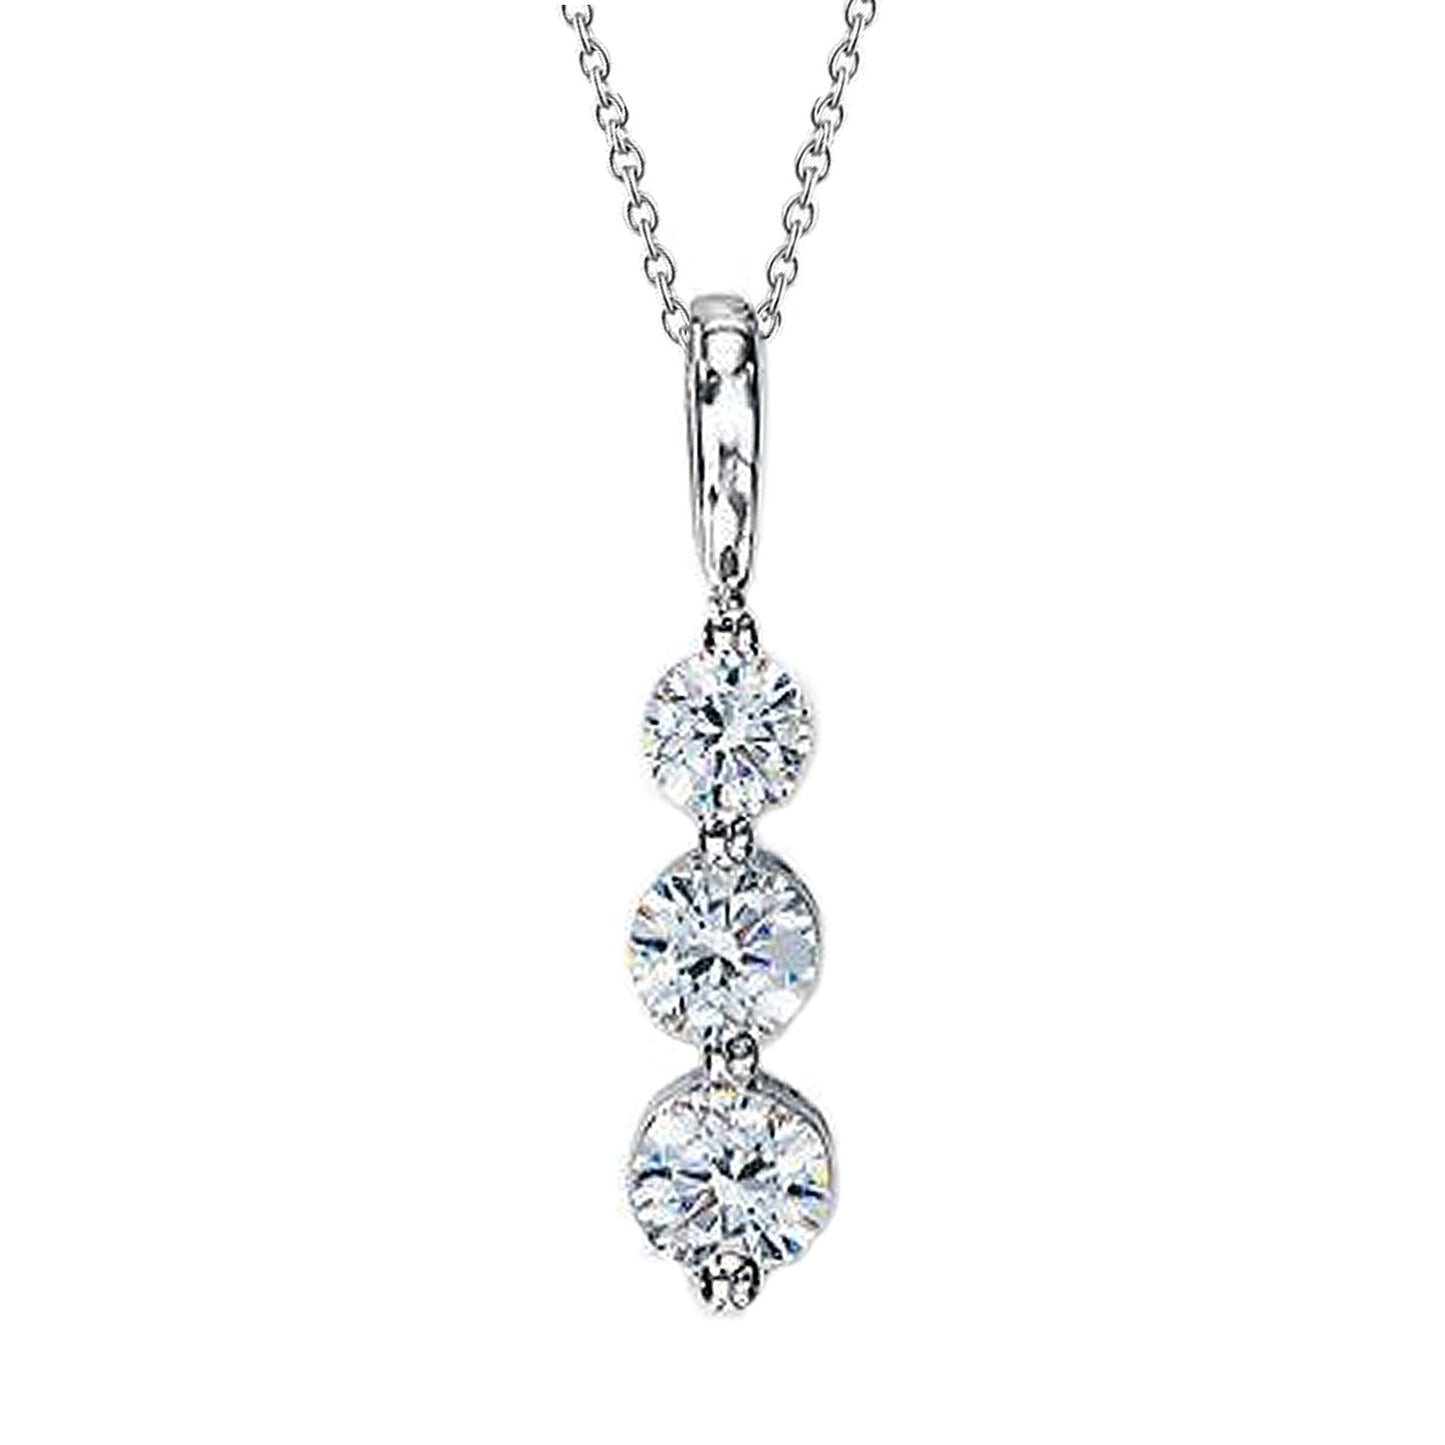 Round White Diamond Journey Necklace Pendant 1.9 Carat White Gold 14K